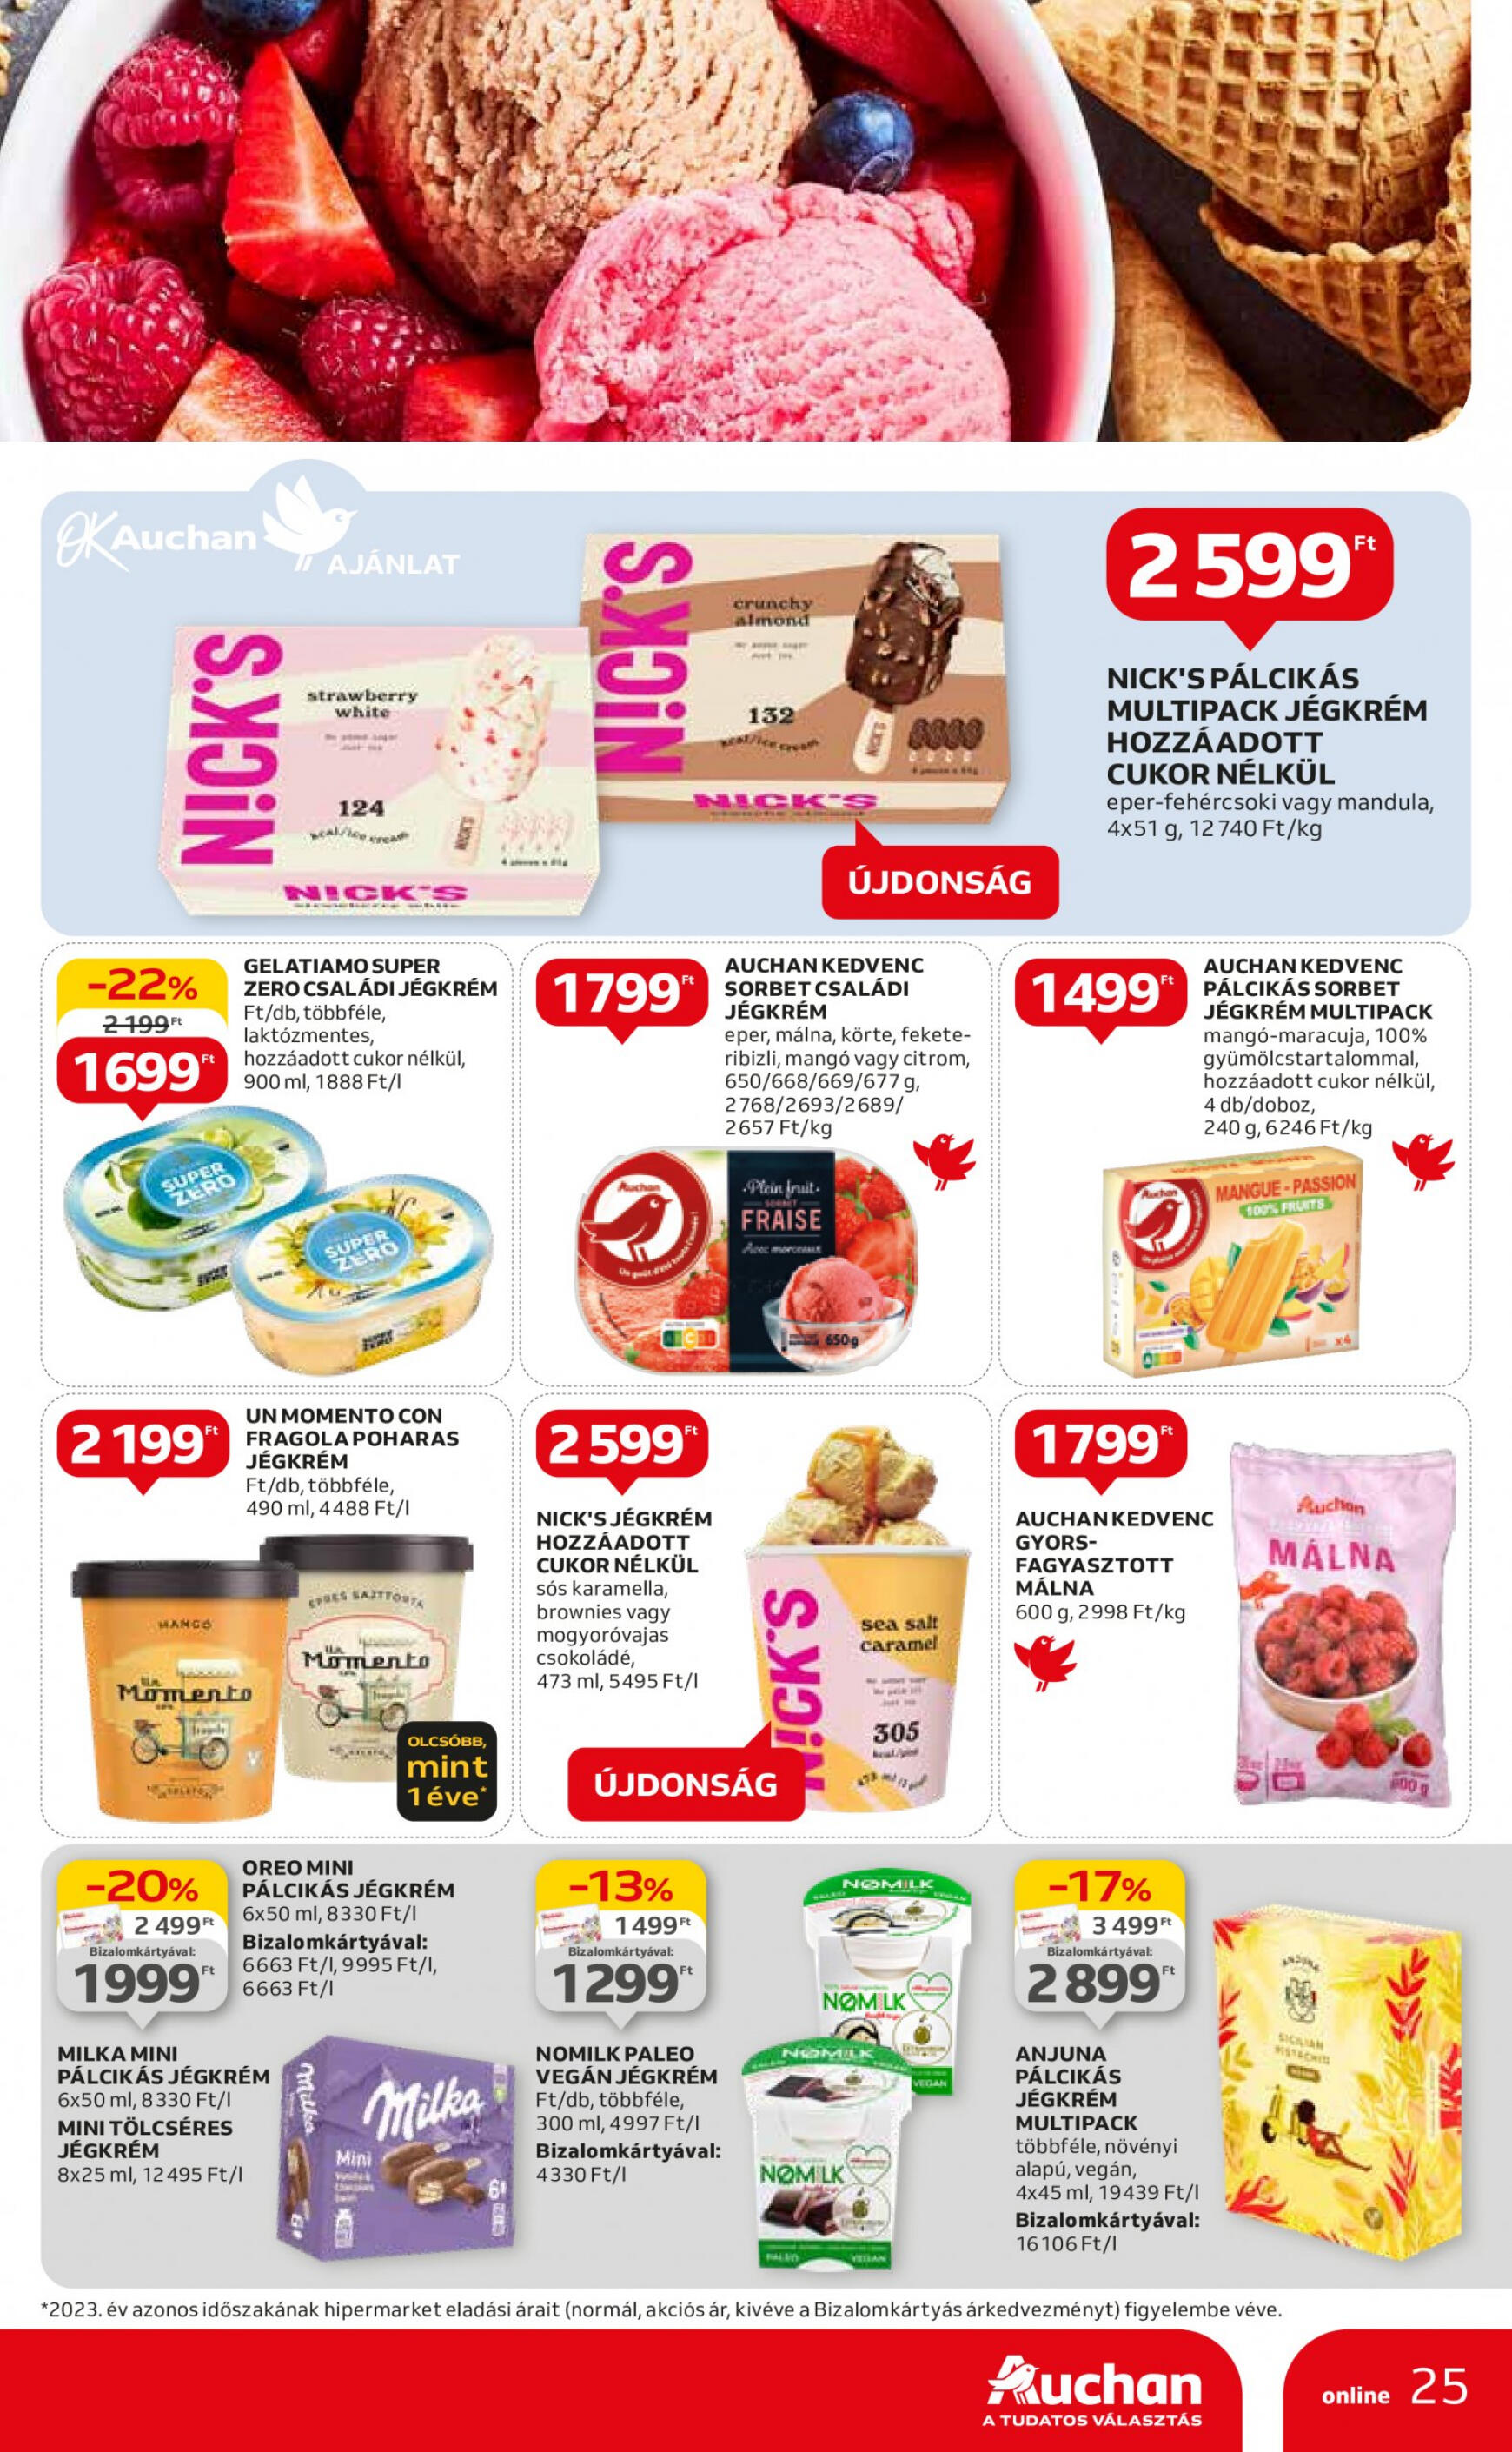 auchan - Aktuális újság Auchan 04.25. - 04.30. - page: 25